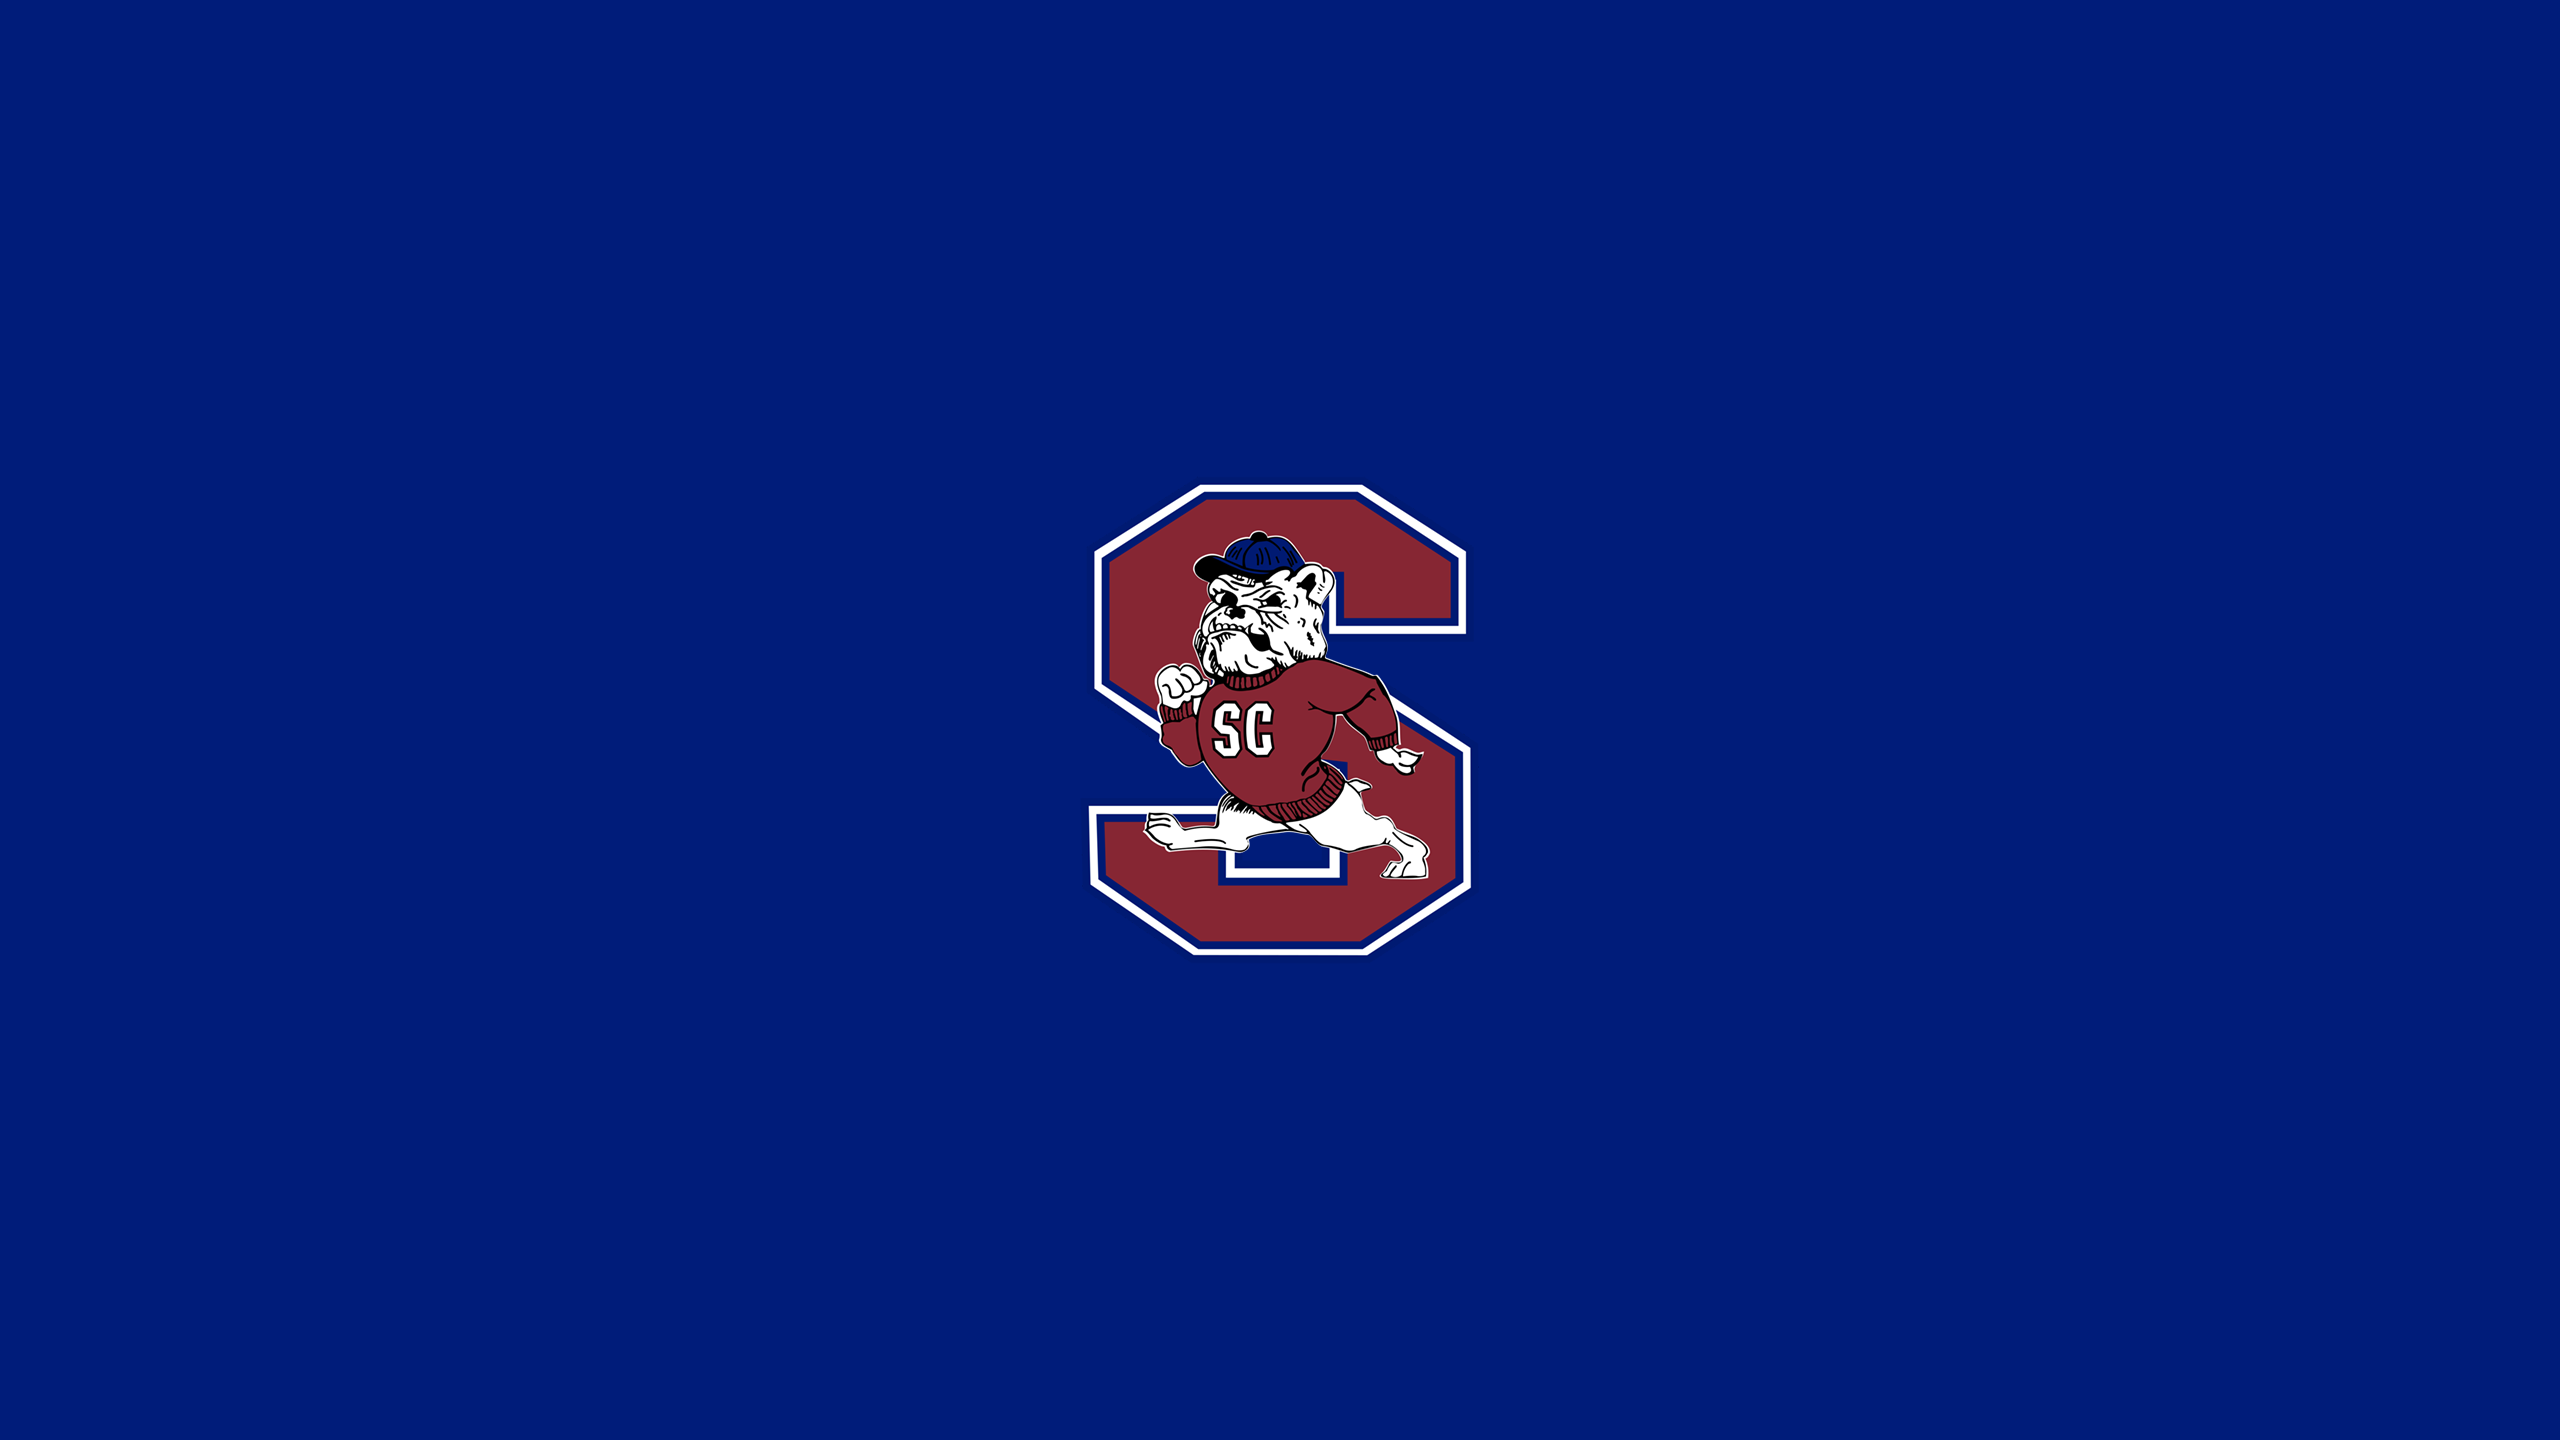 South Carolina State Bulldogs Basketball - NCAAB - Square Bettor